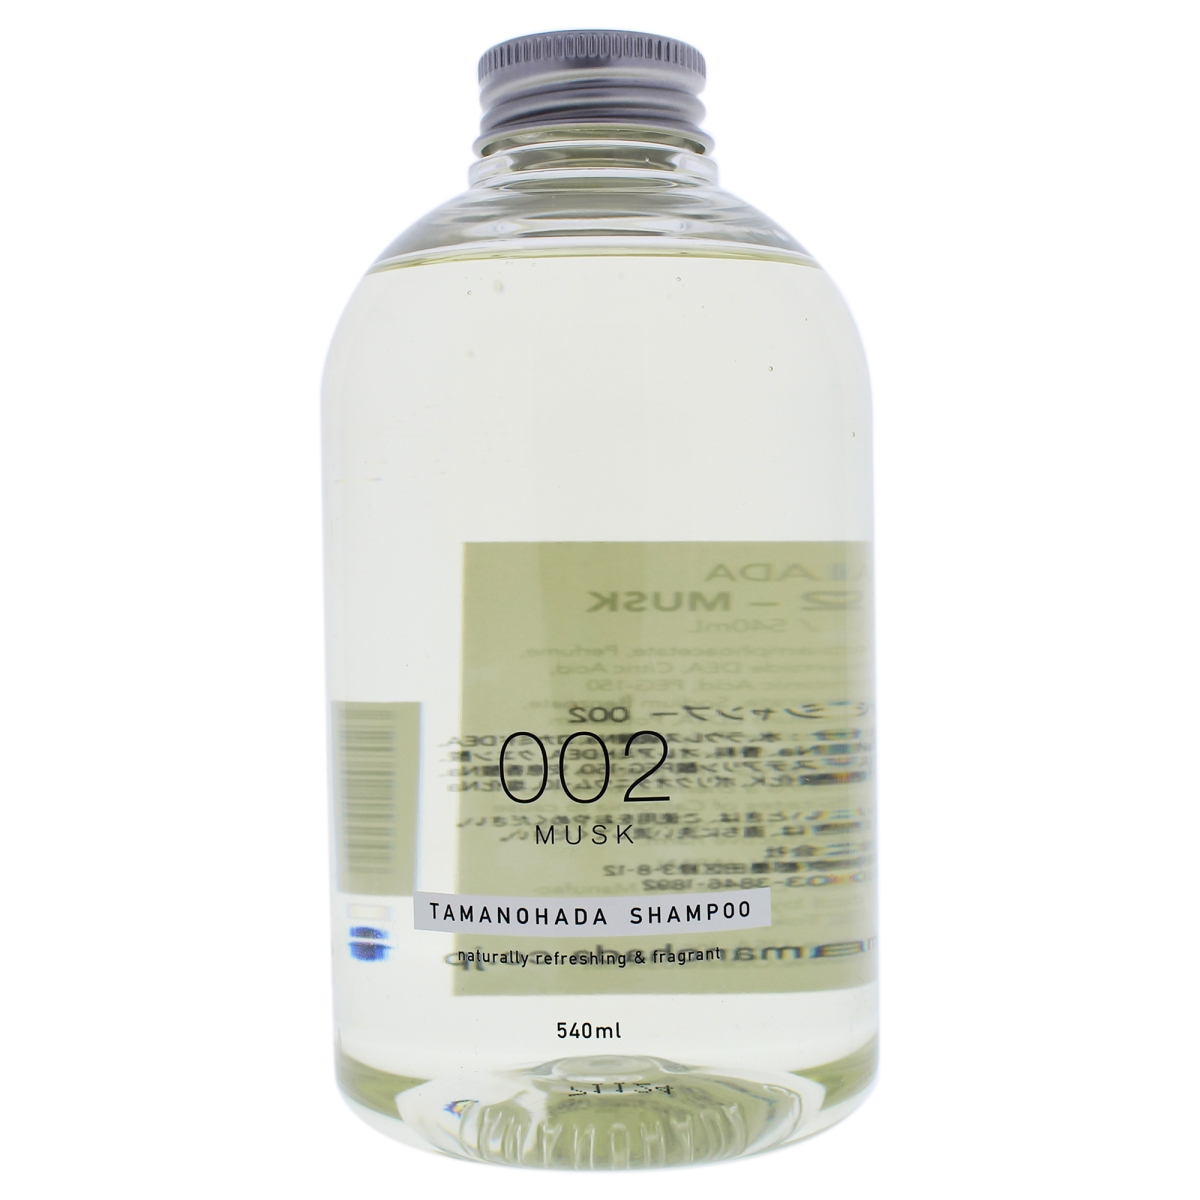 I0088329 Naturally Refreshing & Fragrant Shampoo For Unisex - 002 Musk - 18.3 Oz